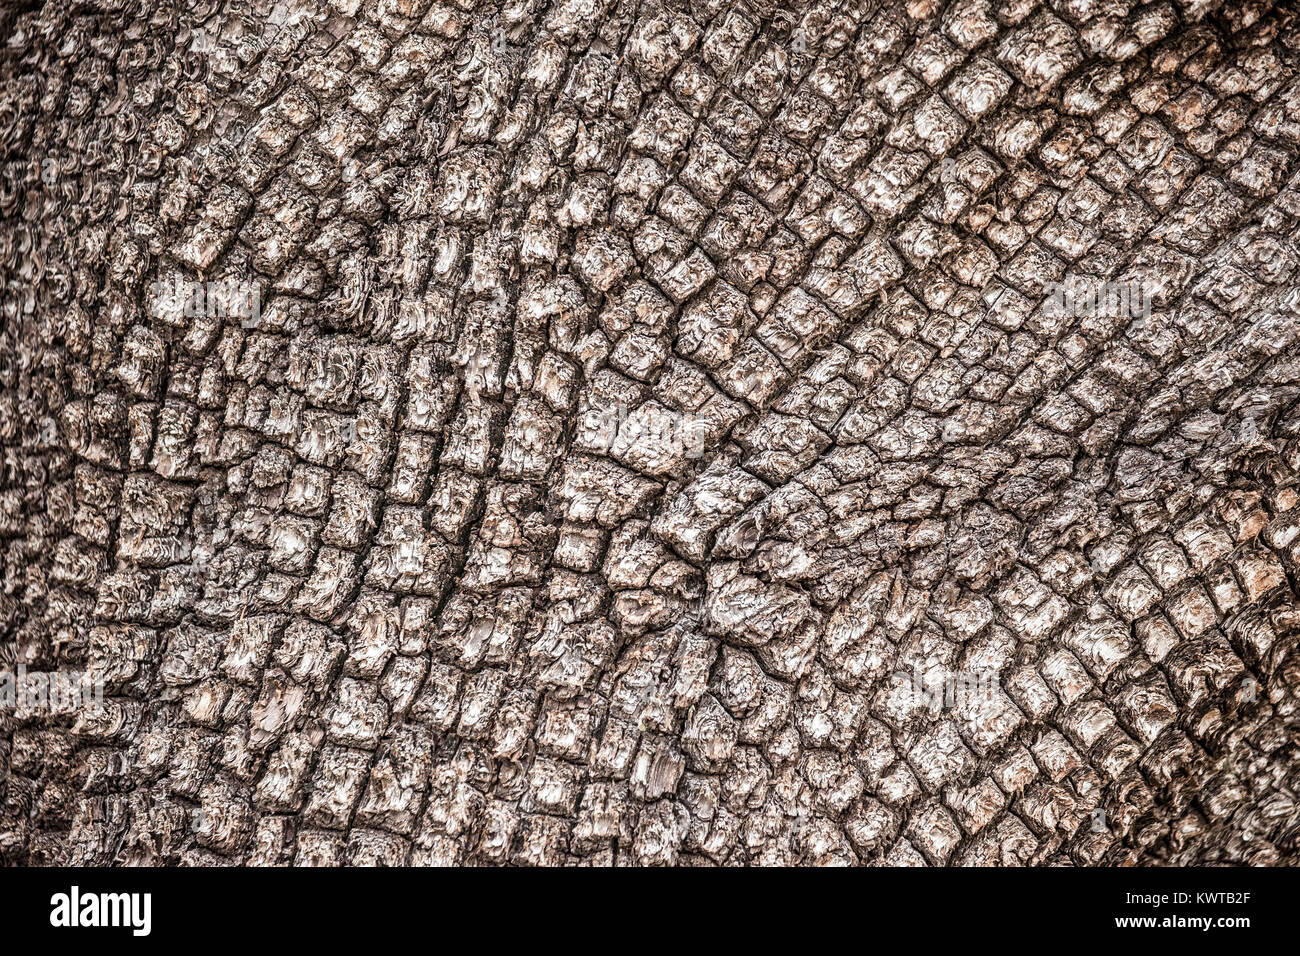 Close up of the rough textured bark of an alligator juniper tree (Juniperus deppeana). Stock Photo